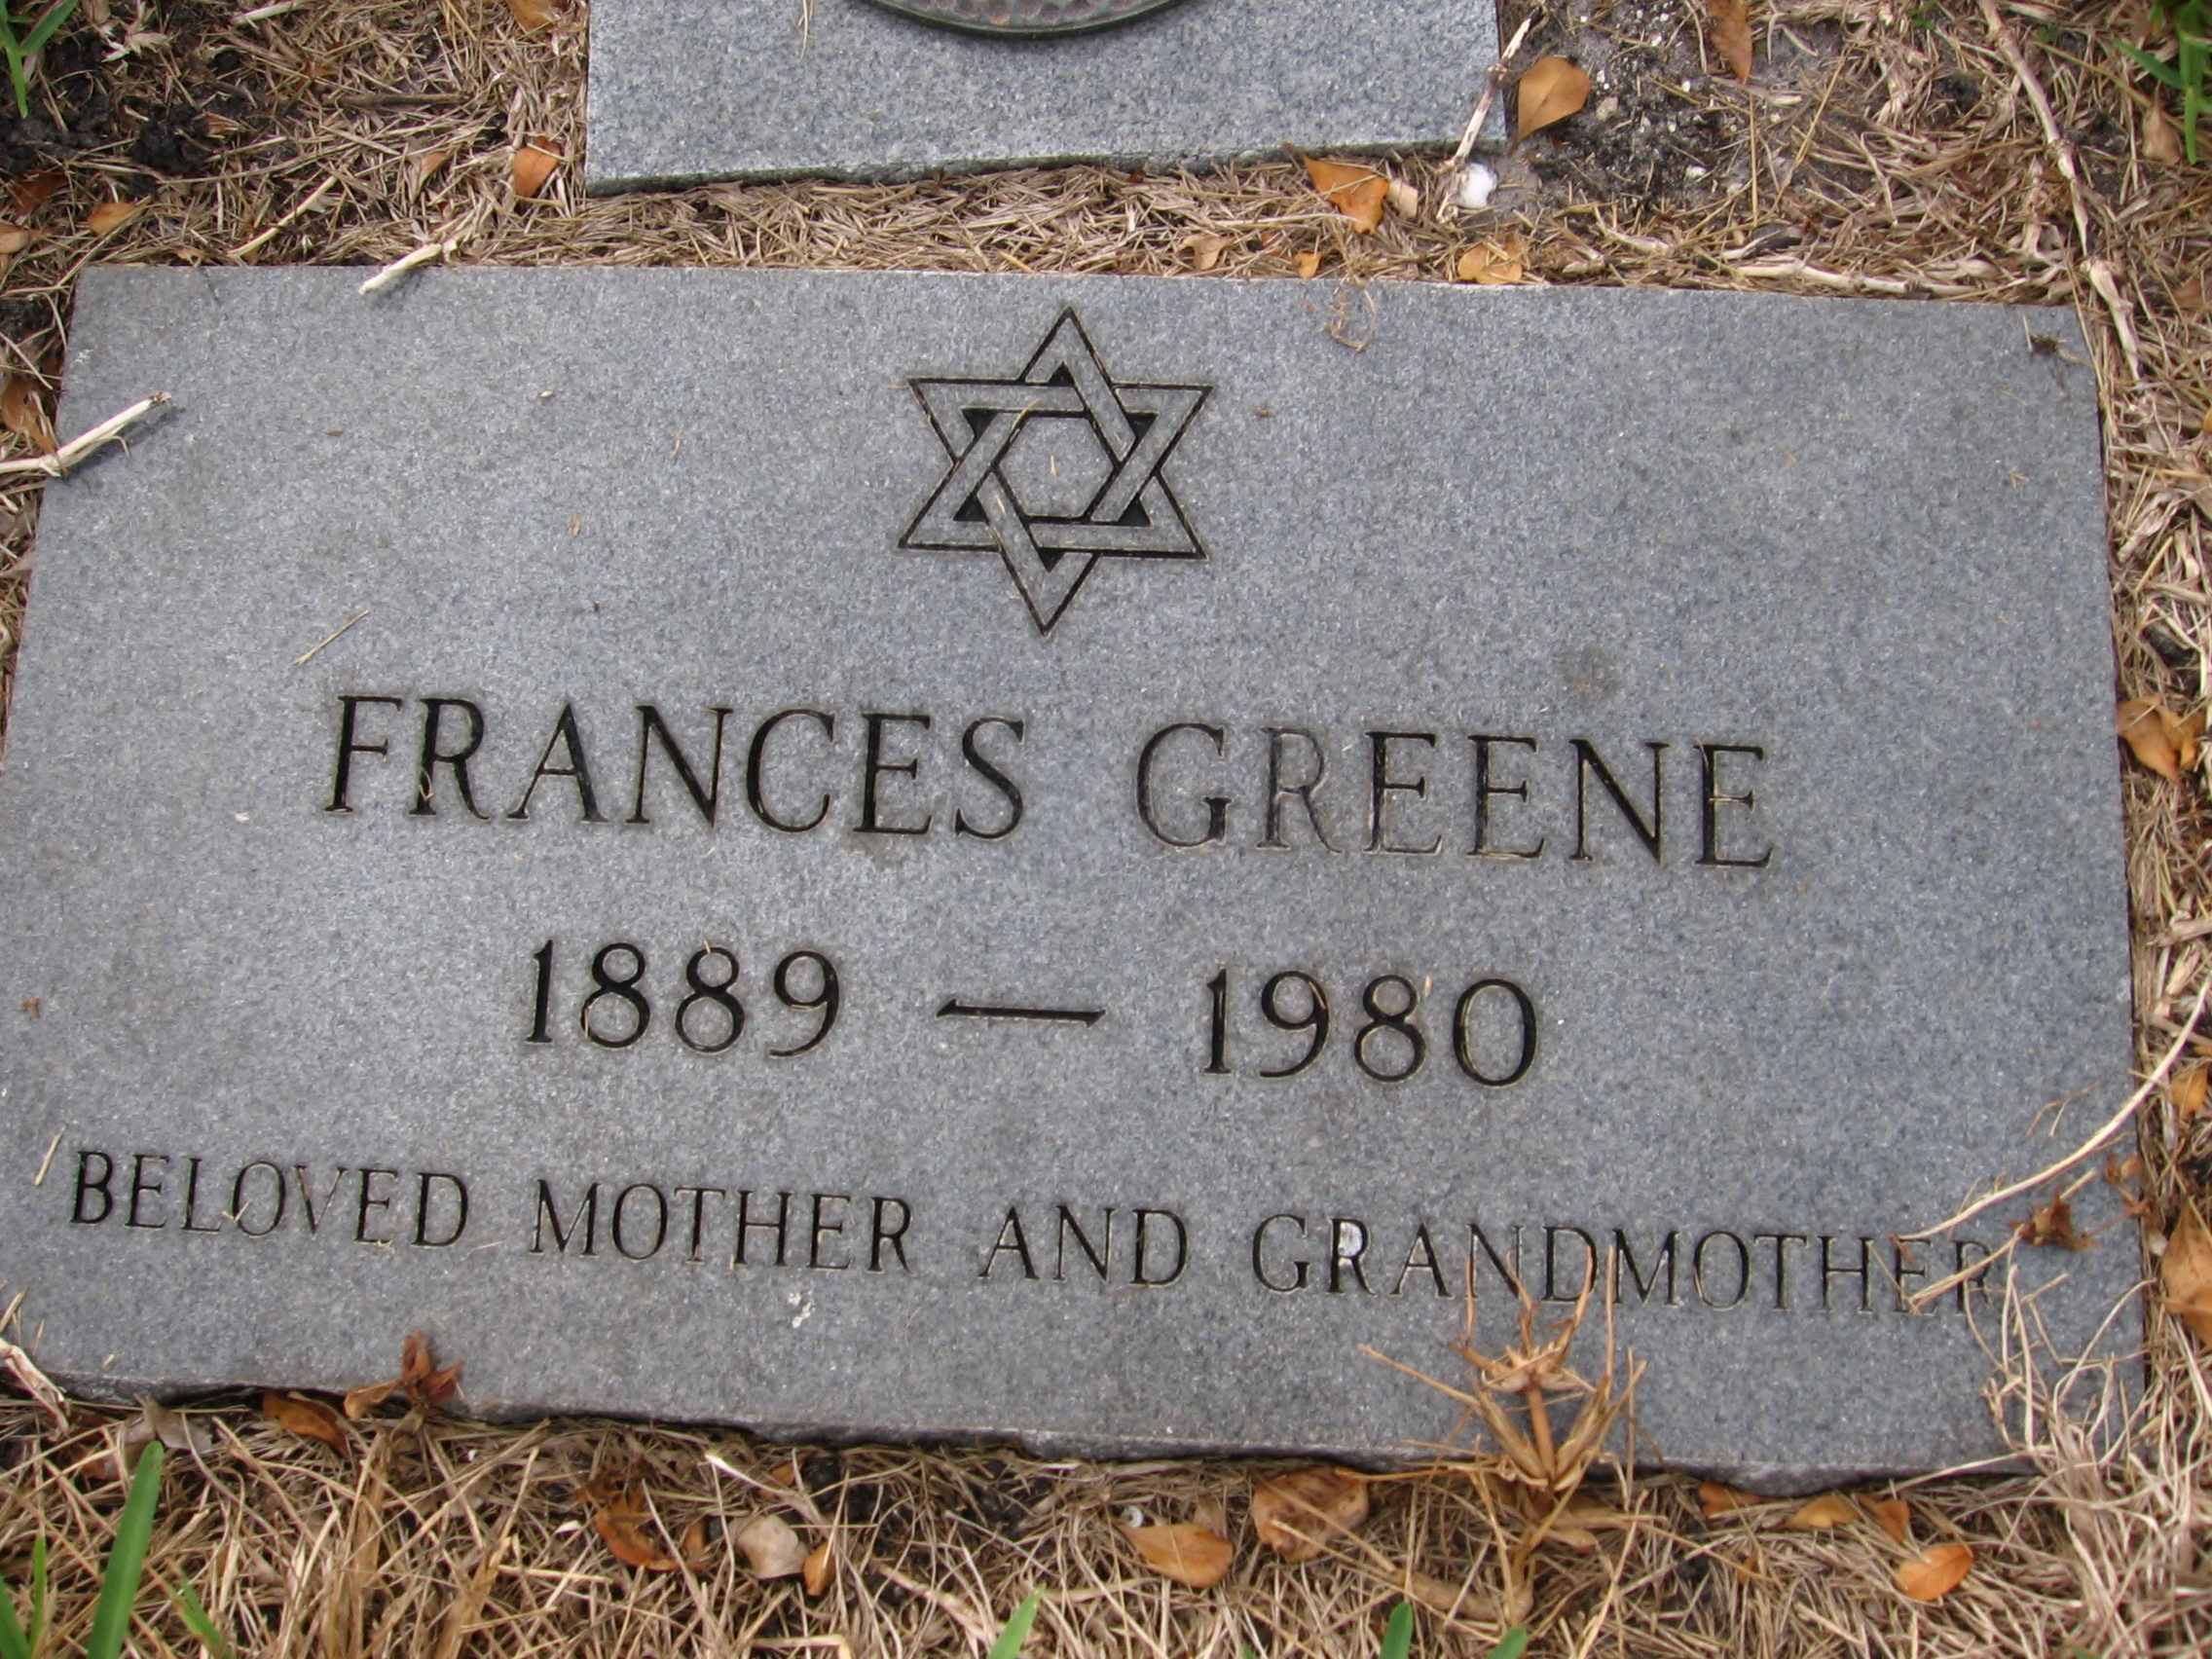 Frances Greene